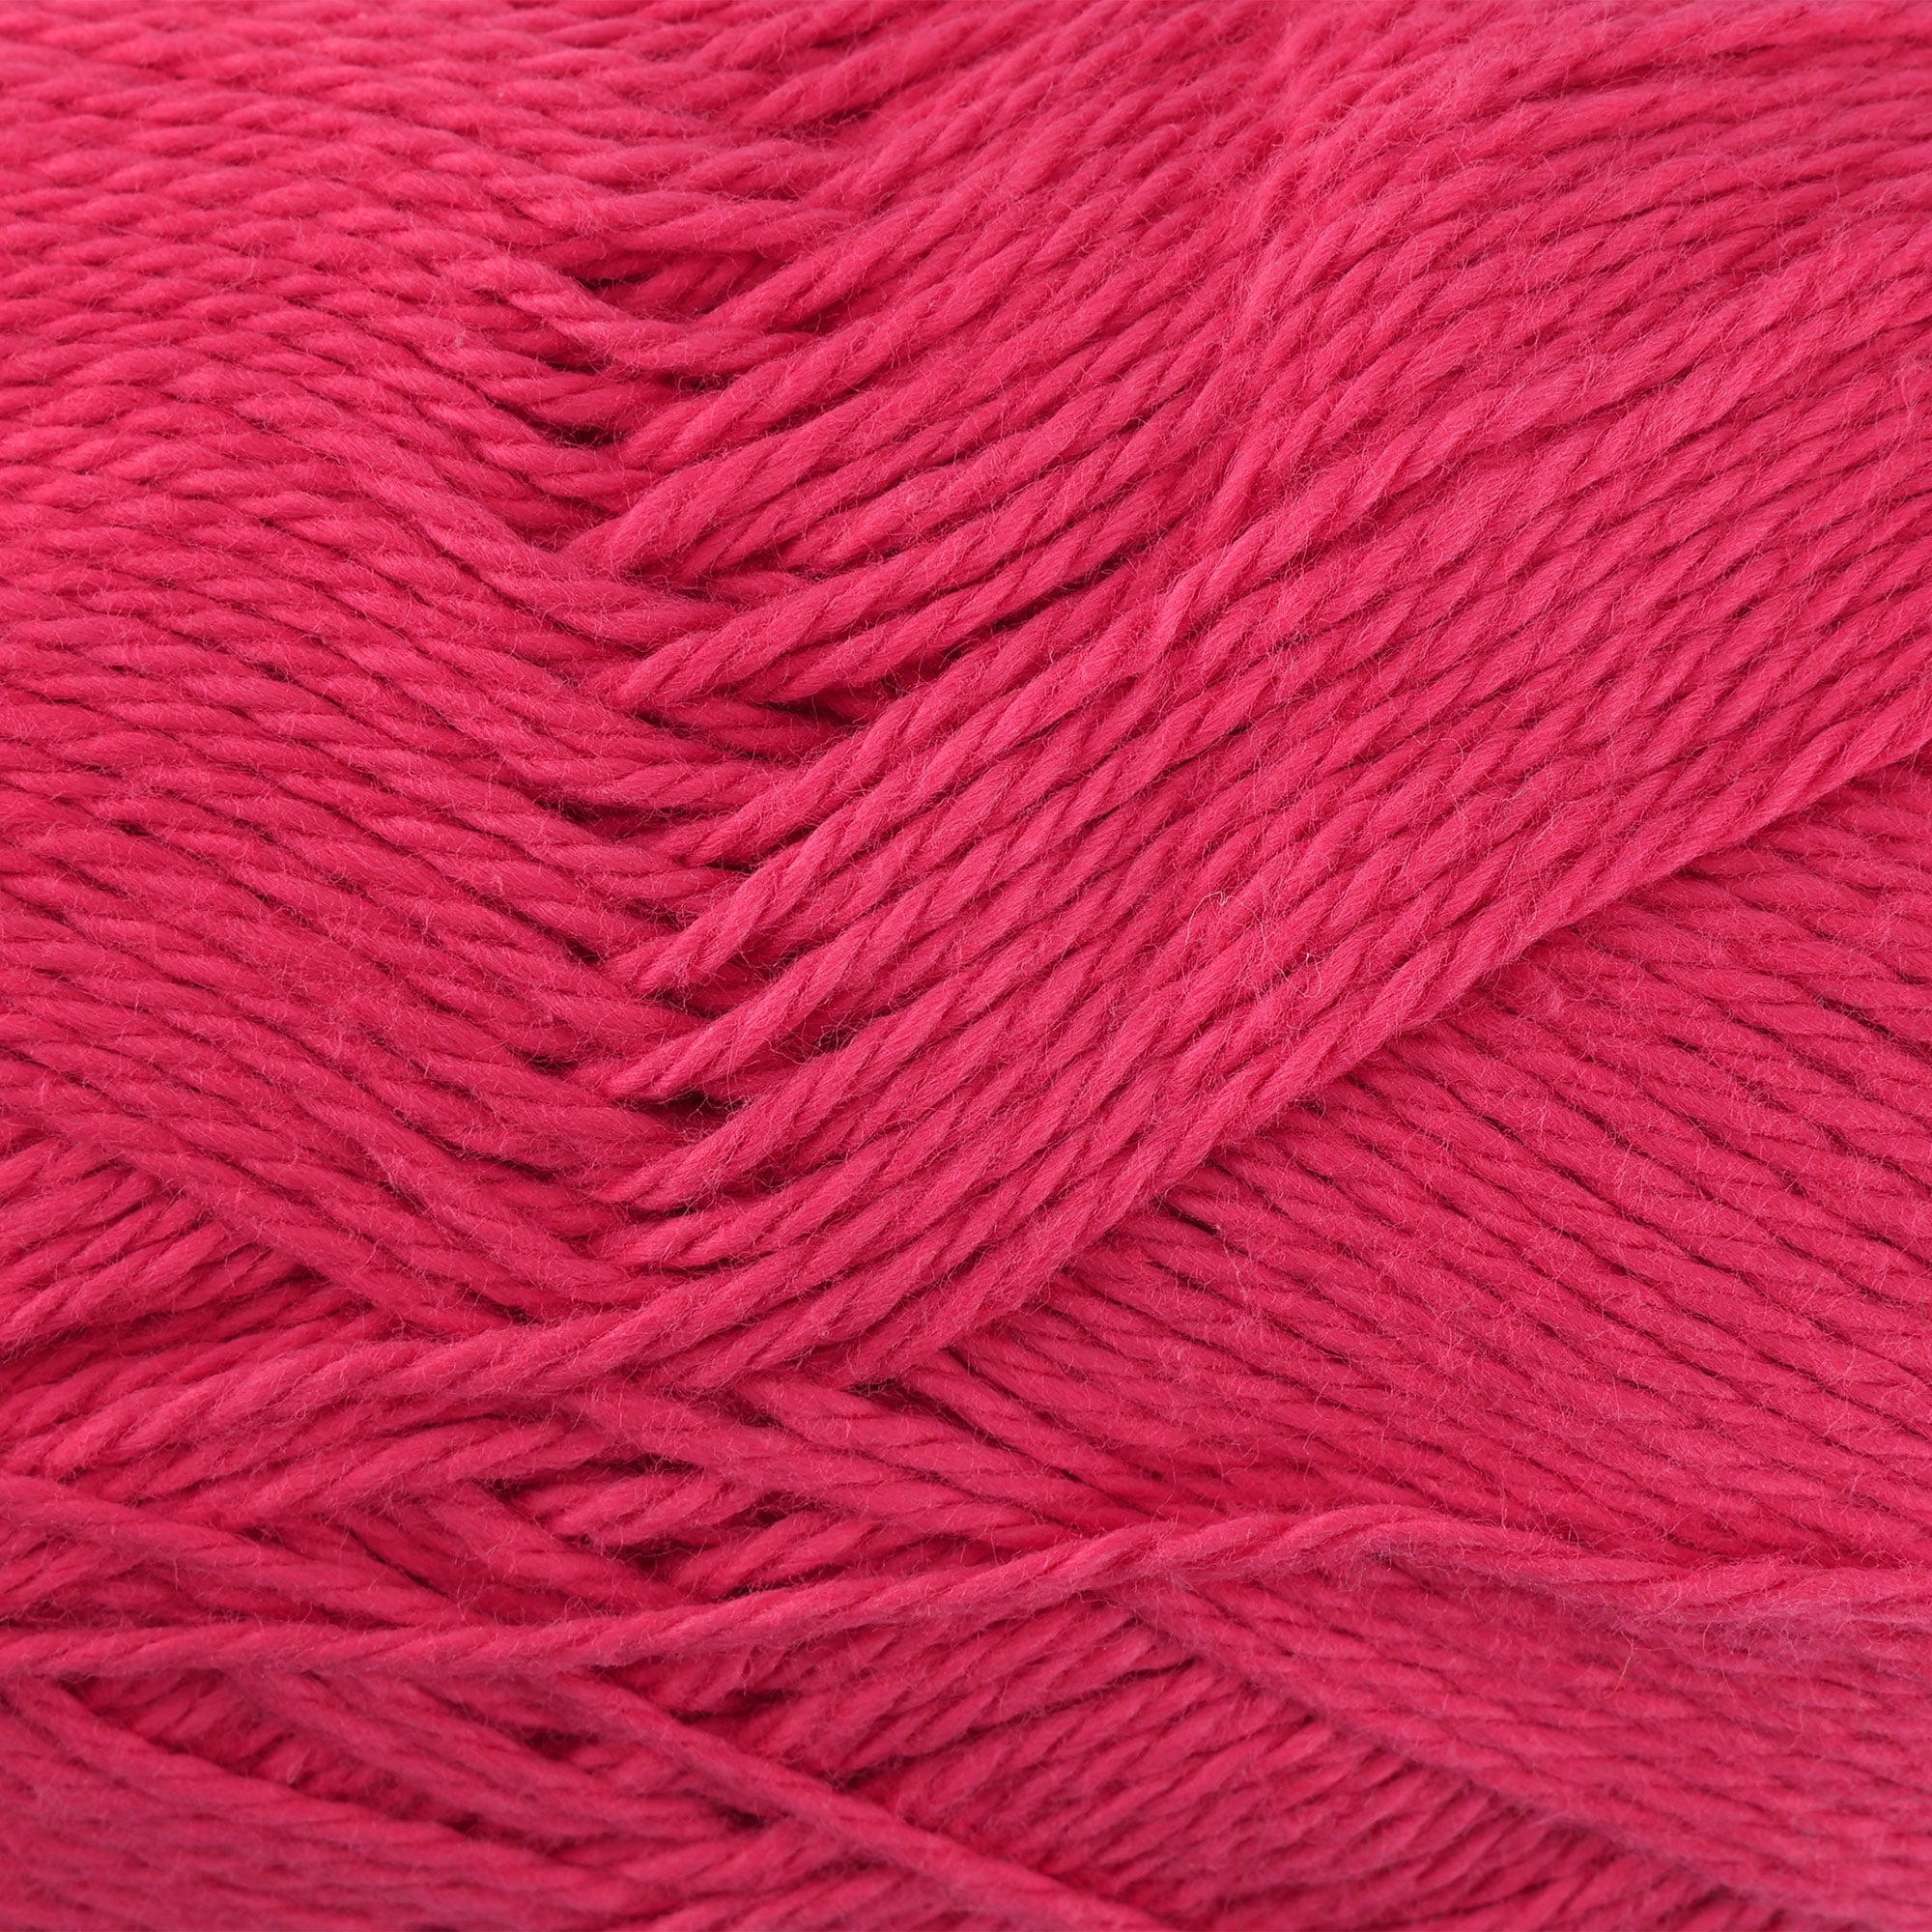 BambooMN Cotton Select Yarn - Island Pink (200g/720yds) - 2 Sport Weight -  4 Skeins 